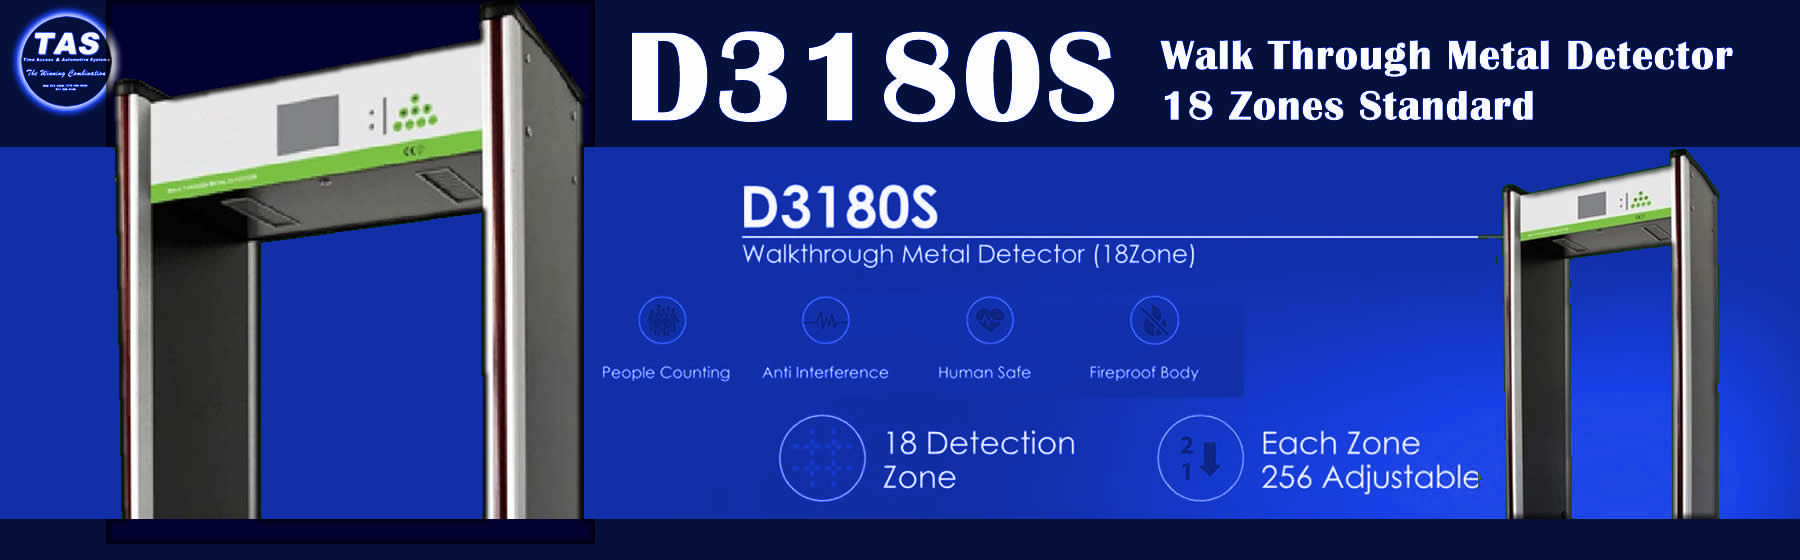 D3180S Walk Through Metal Detector-banner